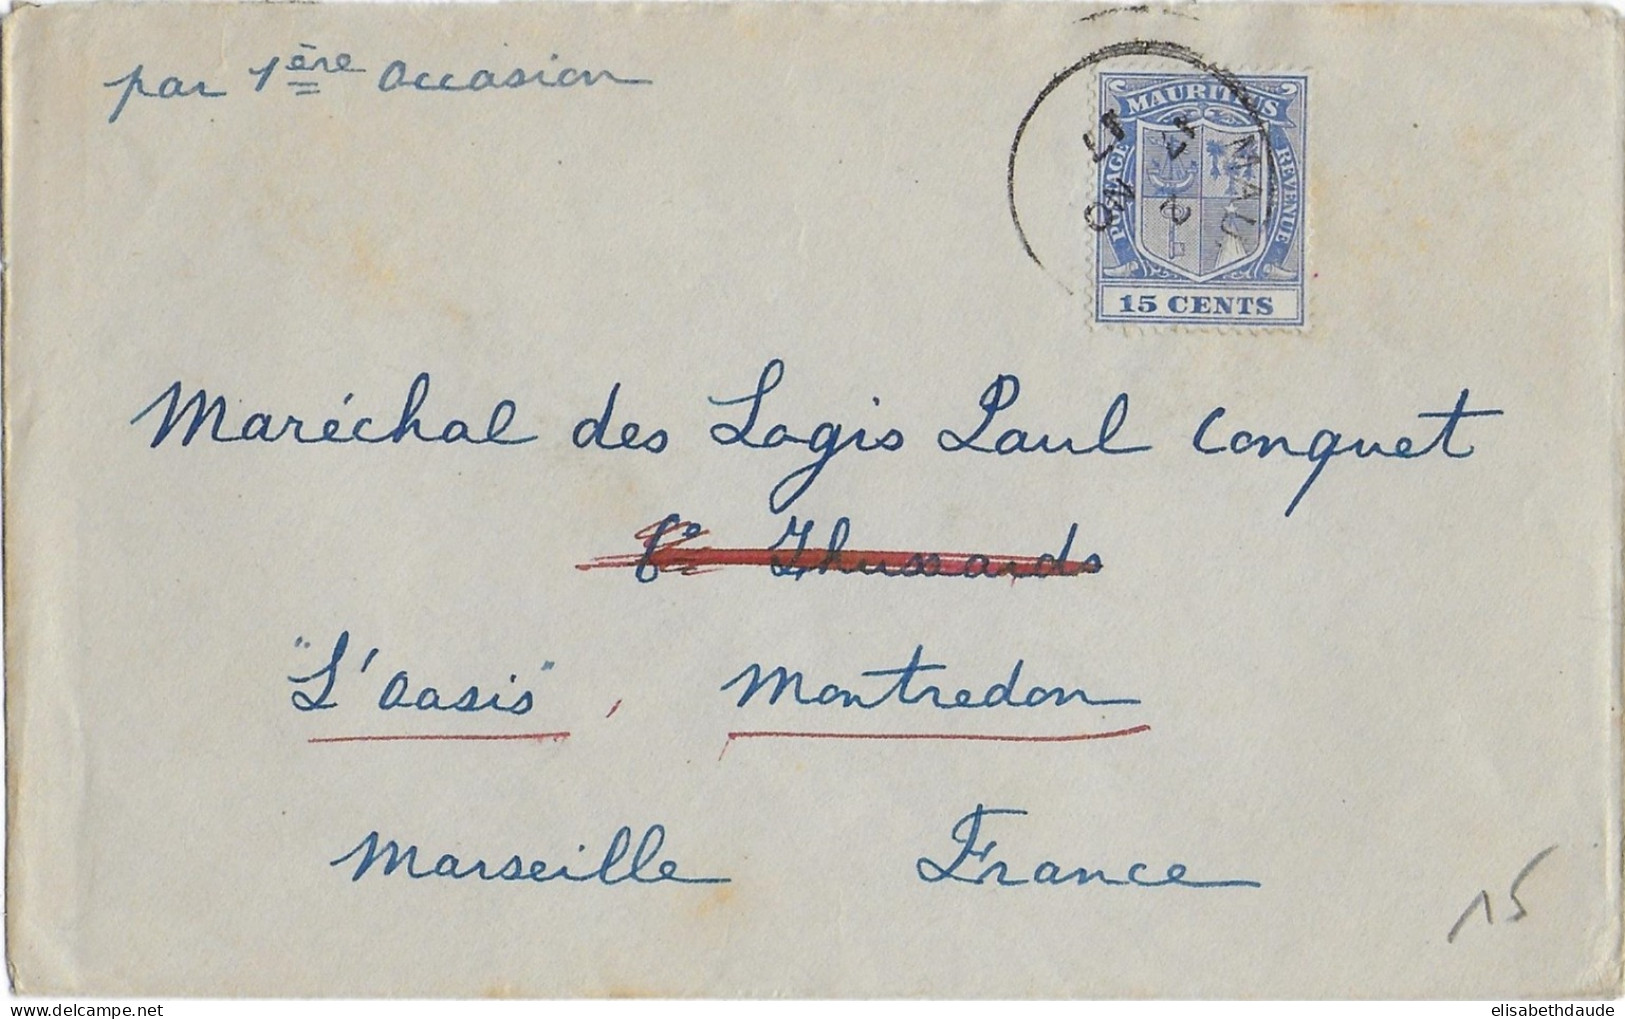 MAURITIUS - 1917 - 15 C SEUL Sur LETTRE  => MARSEILLE - Mauricio (...-1967)